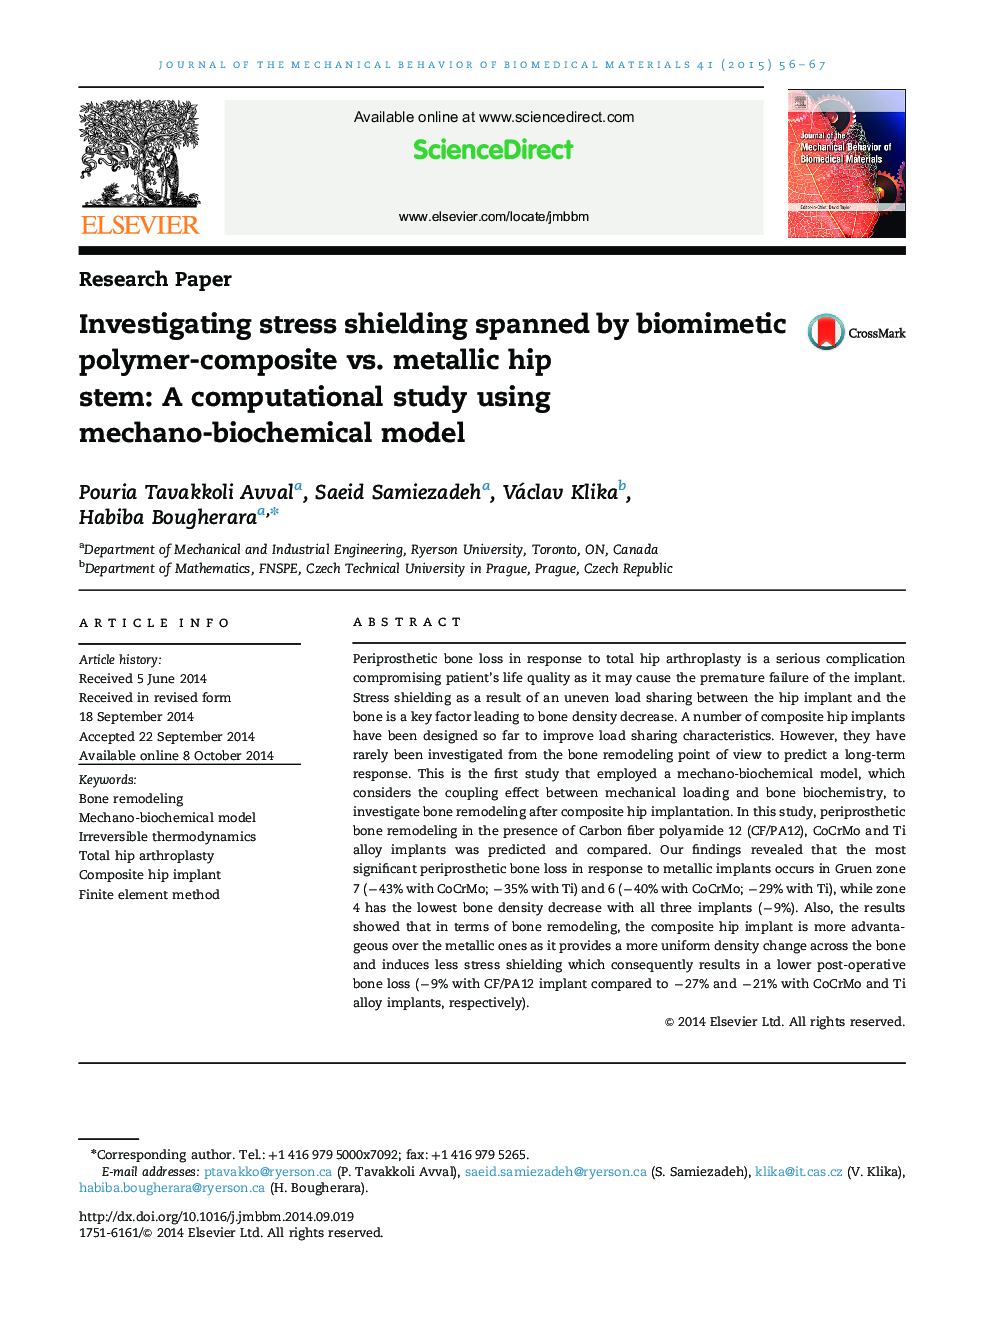 Investigating stress shielding spanned by biomimetic polymer-composite vs. metallic hip stem: A computational study using mechano-biochemical model